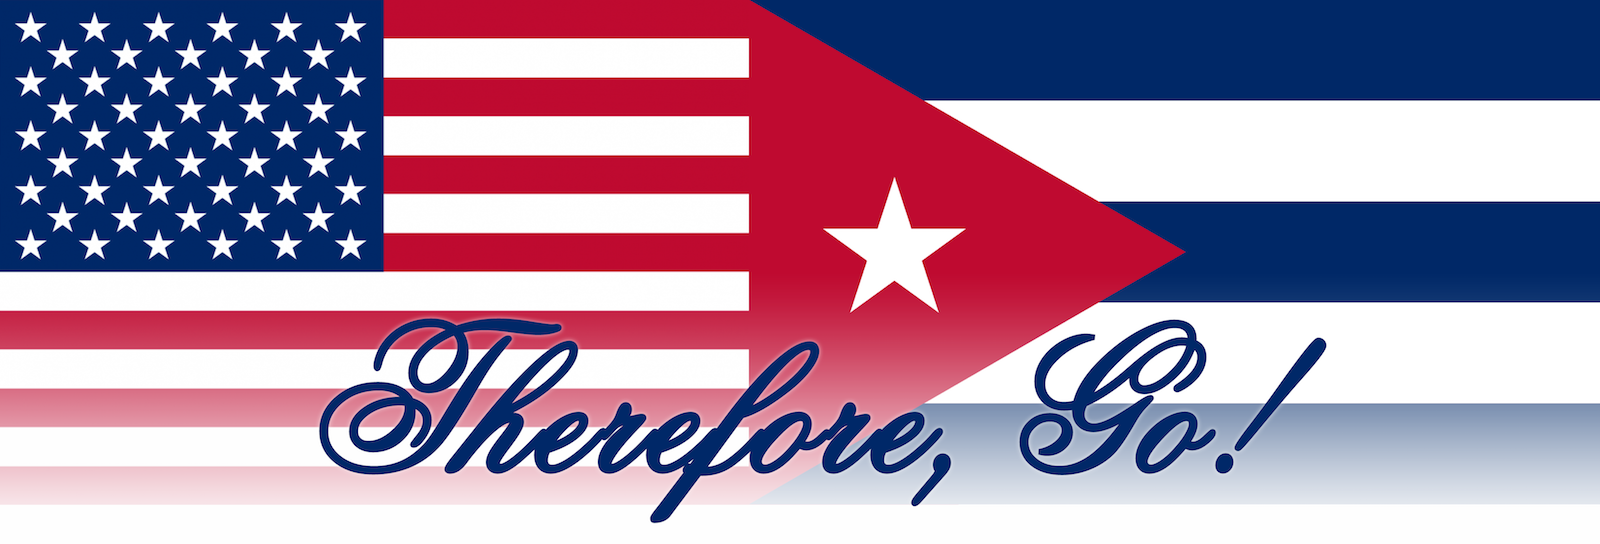 Cuba-Trip2-Logo